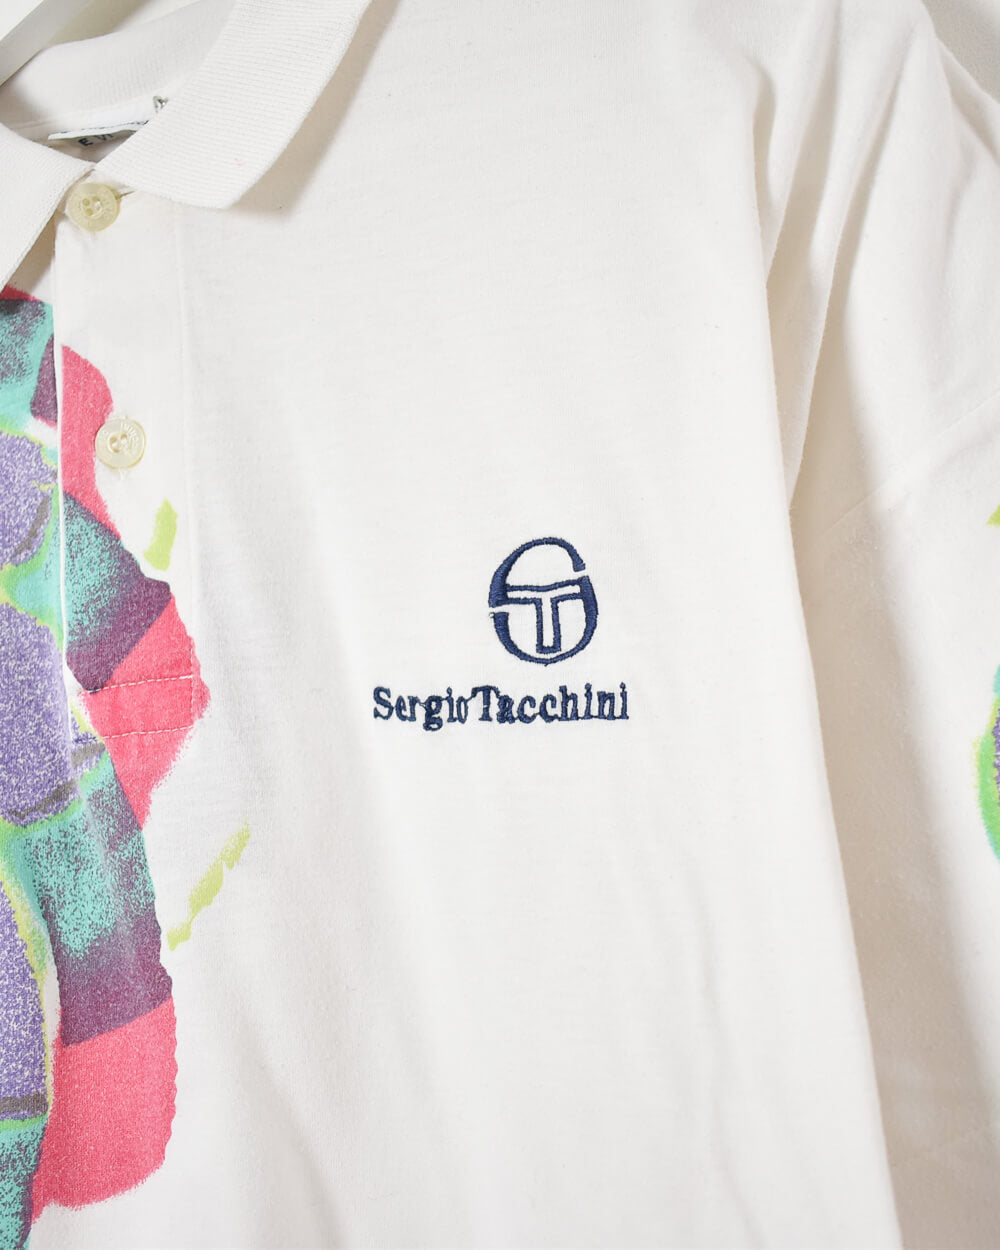 Sergio Tacchini Polo Shirt - Small - Domno Vintage 90s, 80s, 00s Retro and Vintage Clothing 